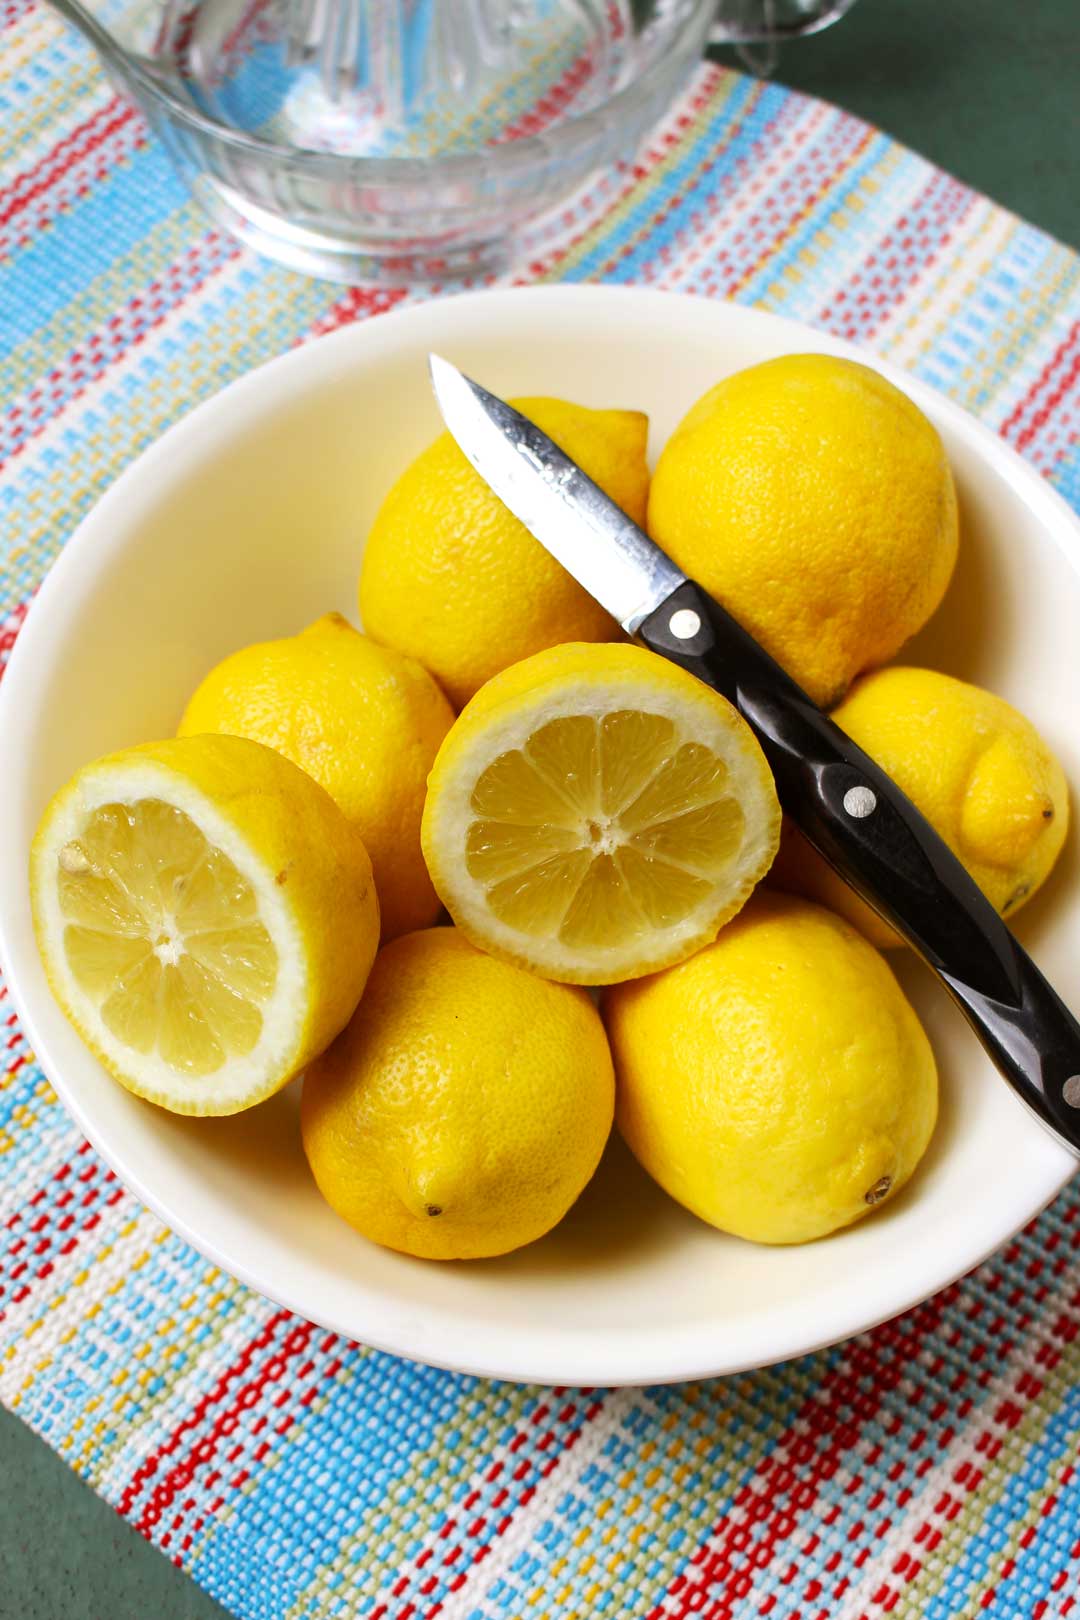 A bowl of lemons and lemon halves with a knife near a glass juicer.